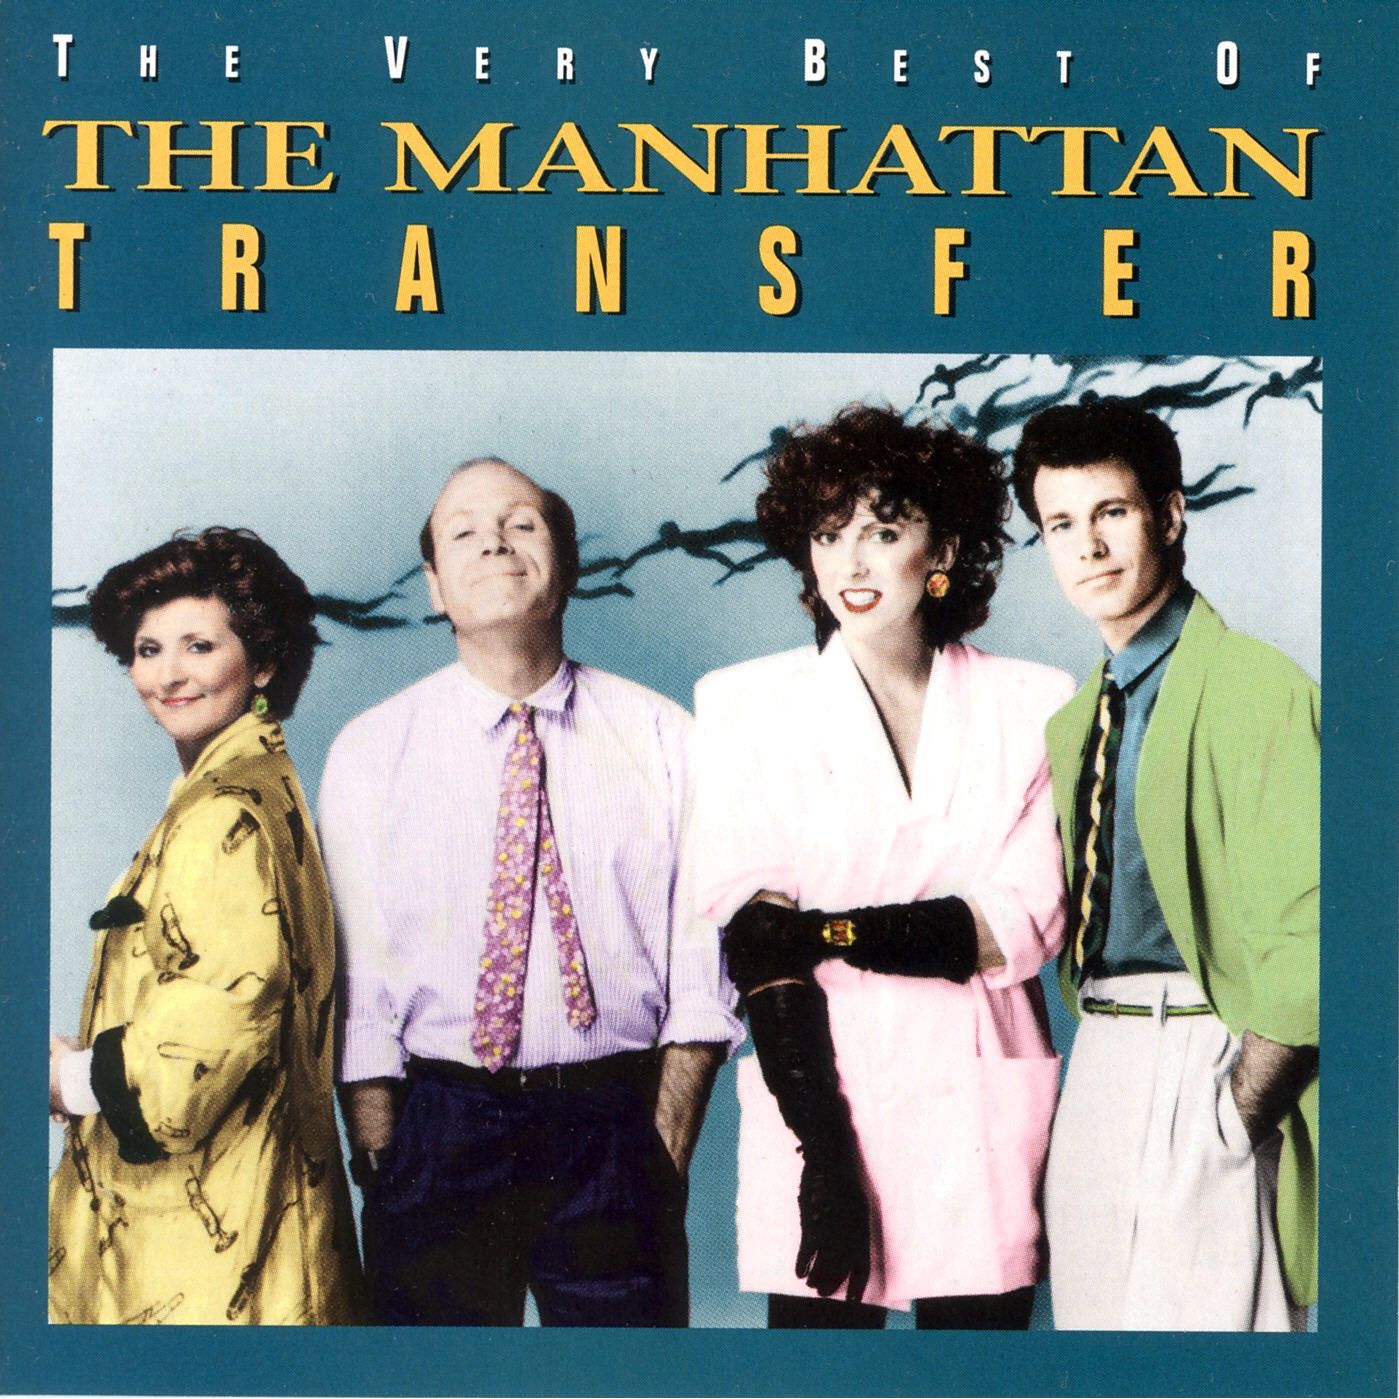 The Manhattan Transfer 